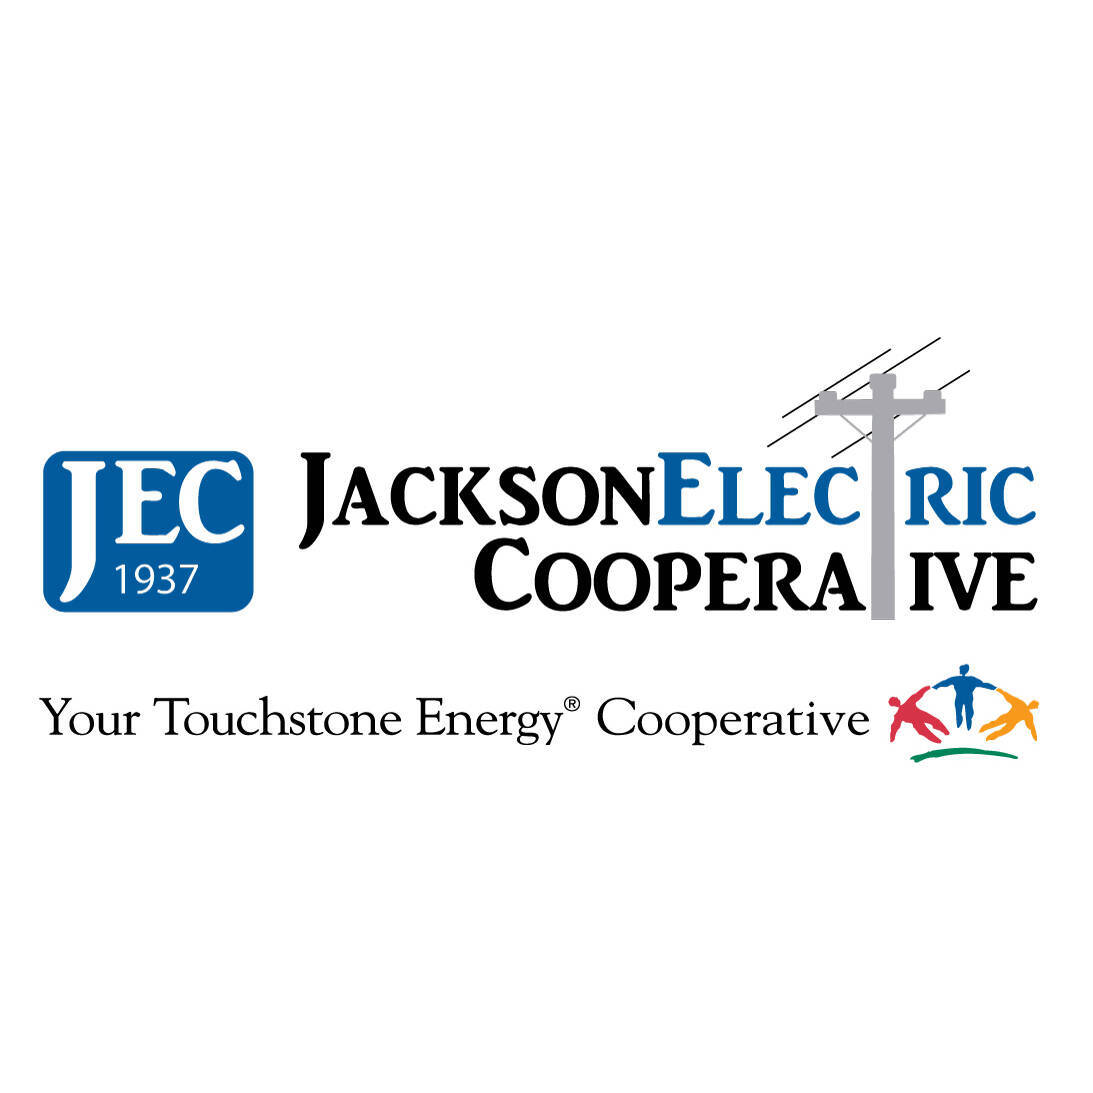 JACKSON ELECTRIC COOPERATIVE SCHOLARSHIP